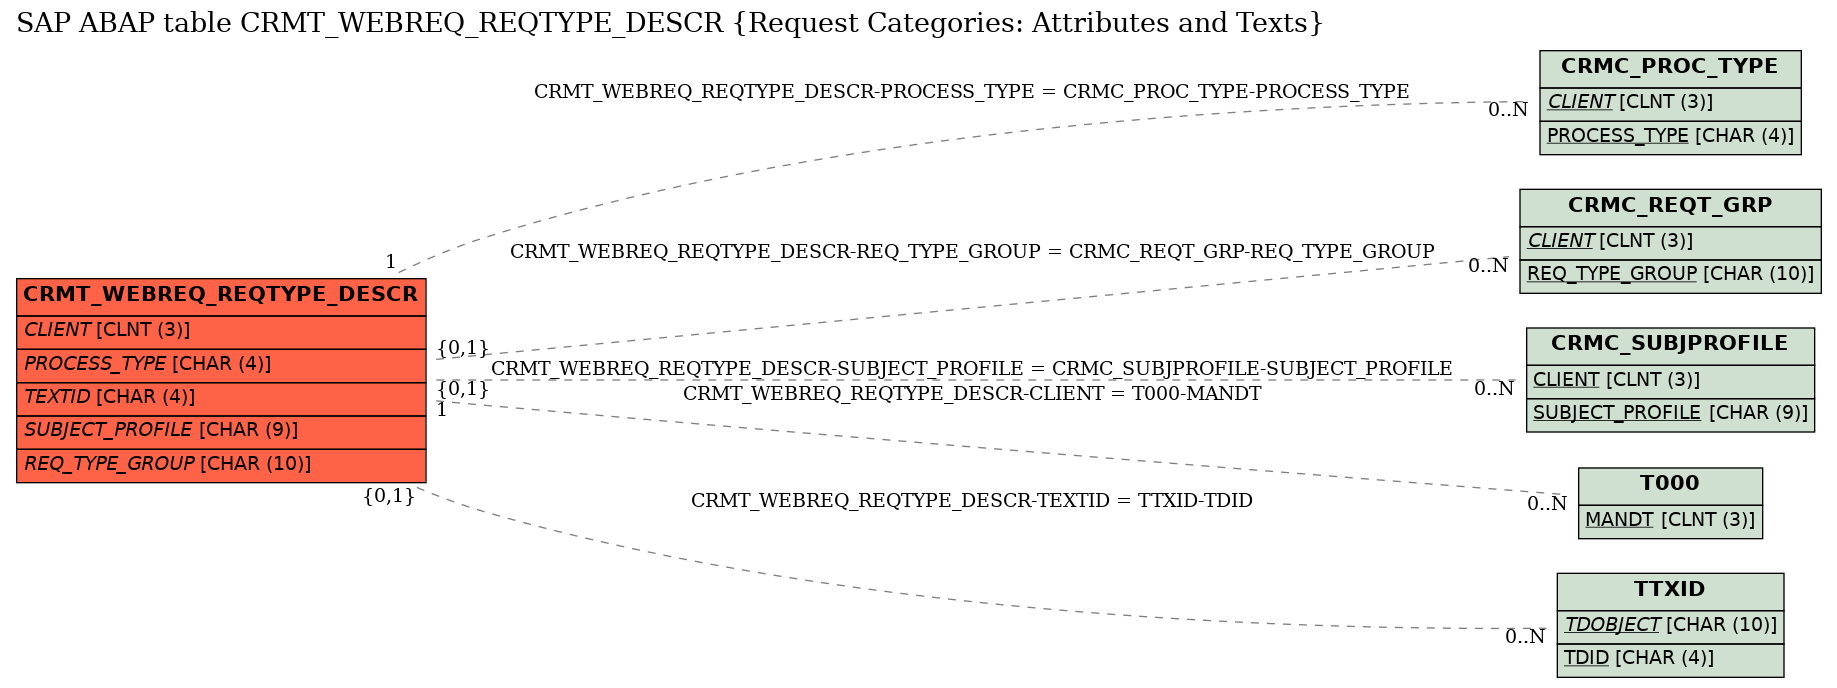 E-R Diagram for table CRMT_WEBREQ_REQTYPE_DESCR (Request Categories: Attributes and Texts)